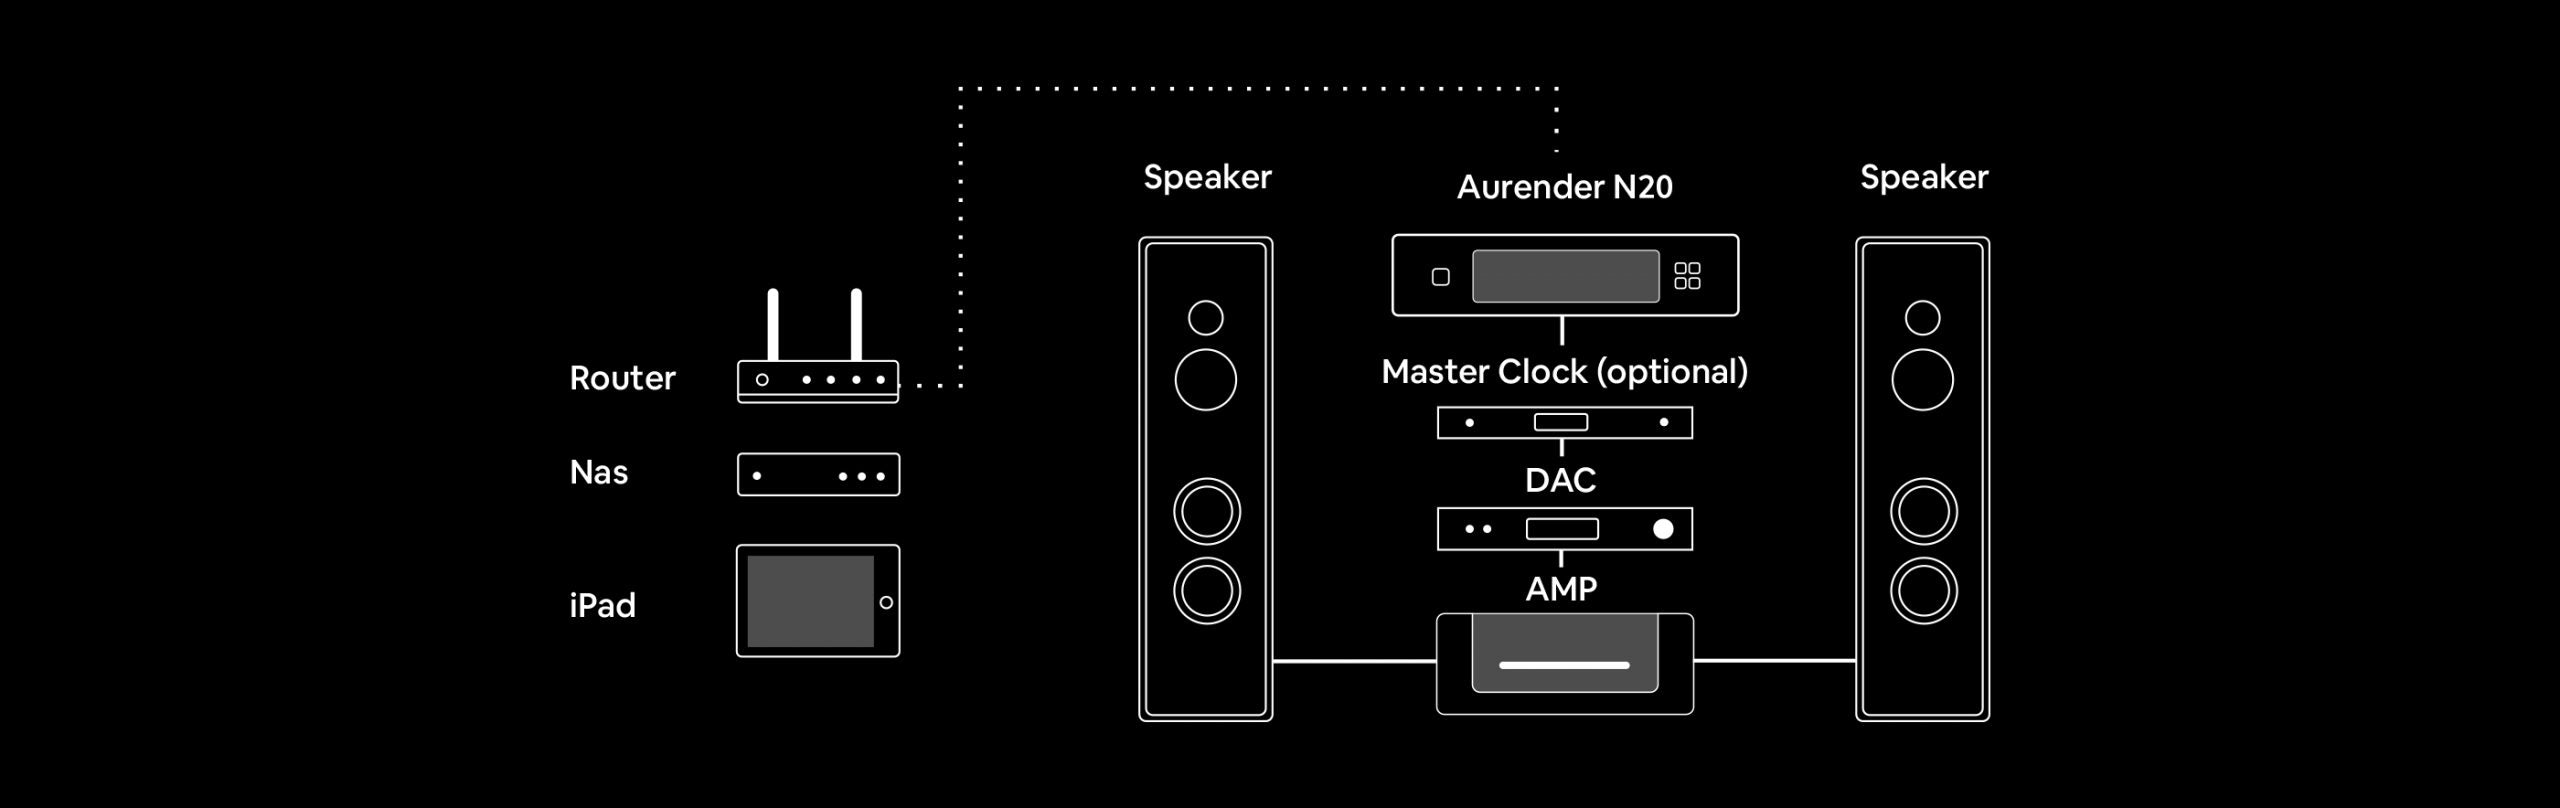 Douglas HiFI - Aurender N20 High Definition Caching Music Server - Streamer - Typical Installation - Osborne Park Perth